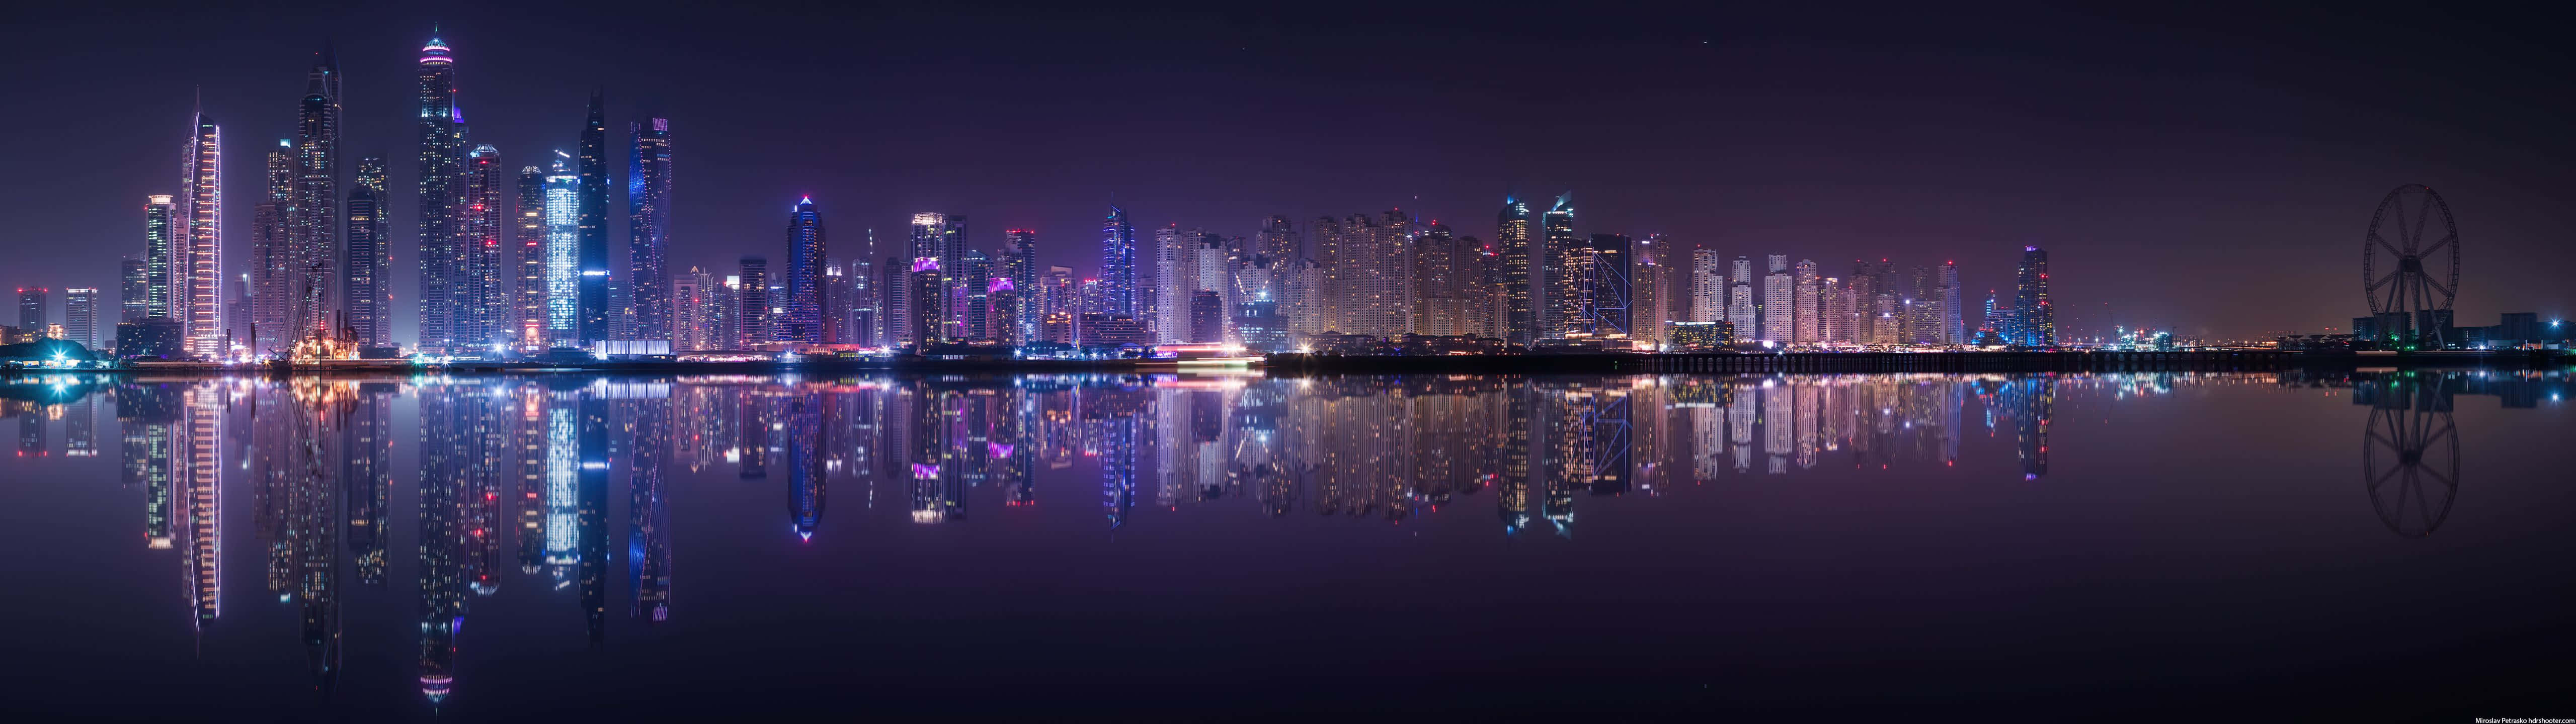 Panoramic Nighttime Cityscape Reflection Wallpaper